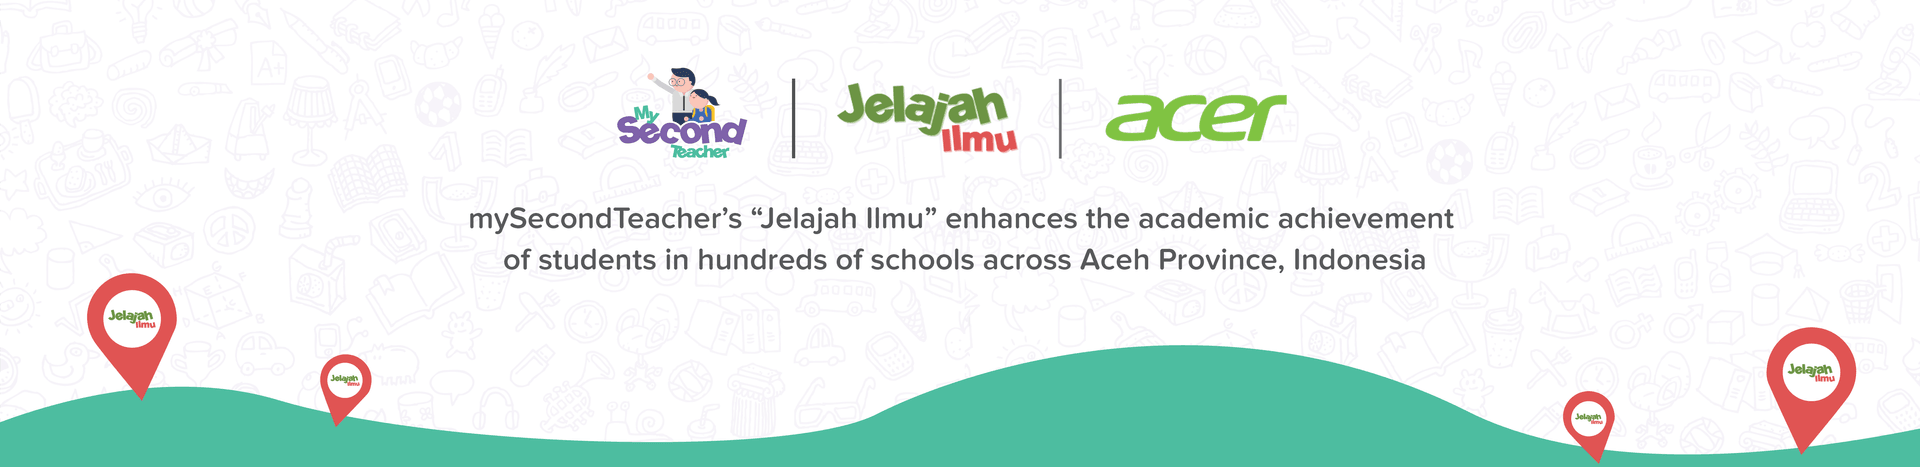 mySecondTeacher’s “Jelajah Ilmu” enhances the academic achievement of students in hundreds of schools across Aceh Province, Indonesia